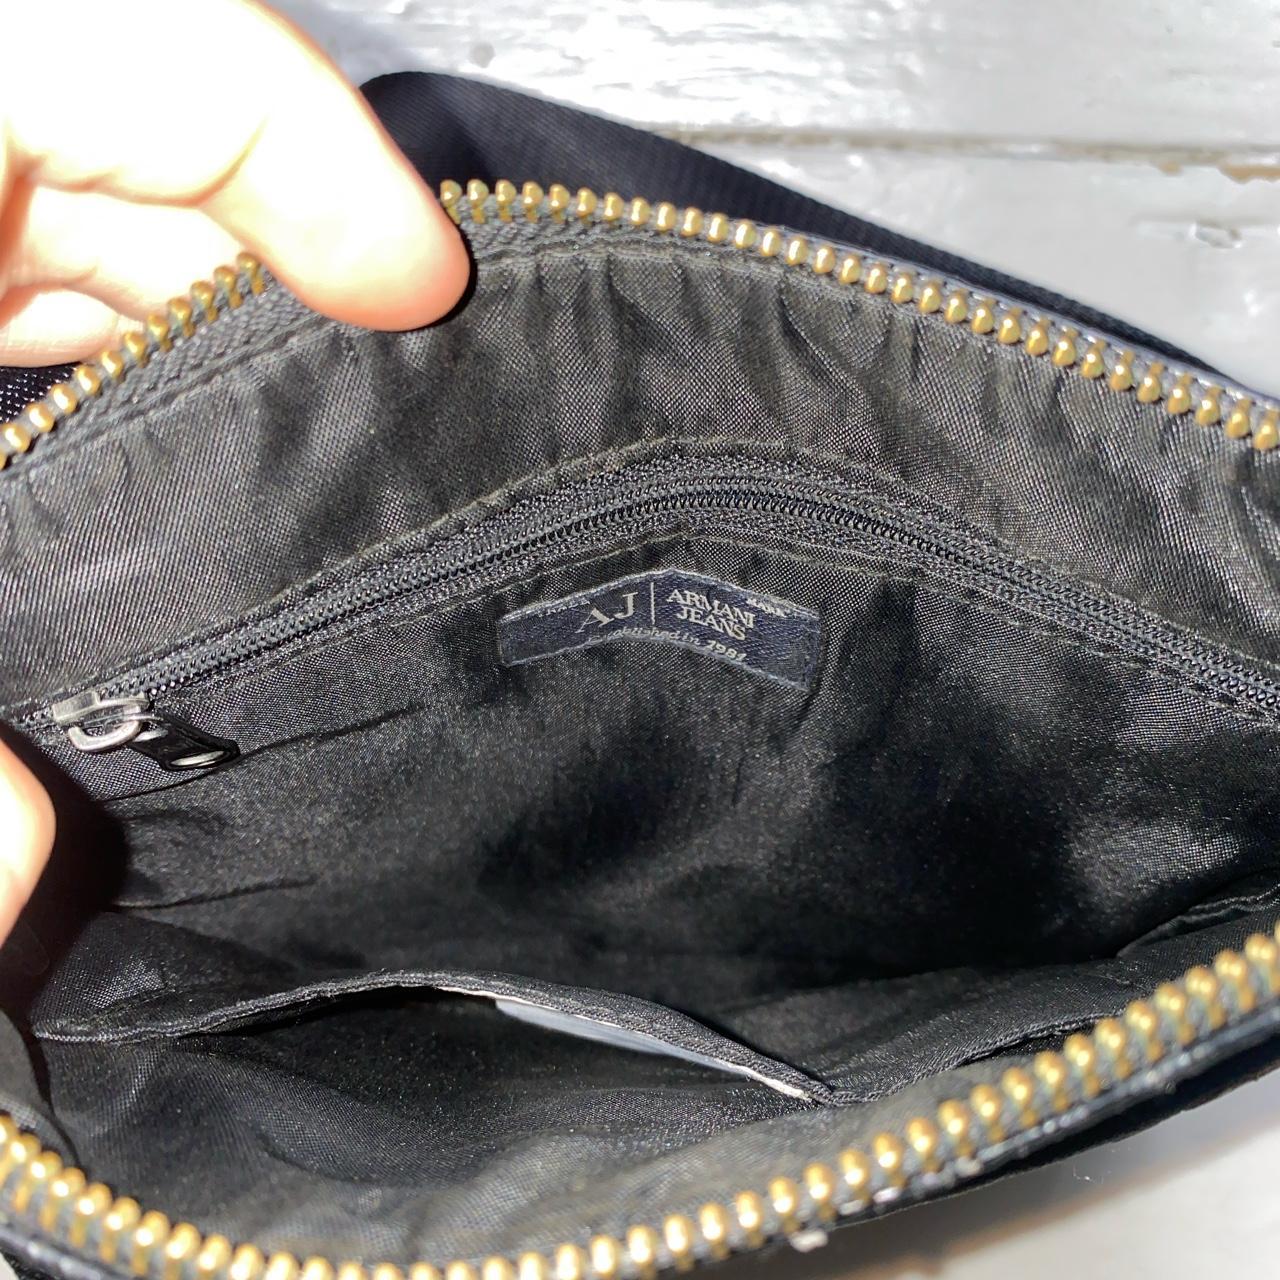 Armani AJ Leather Pouch Bag